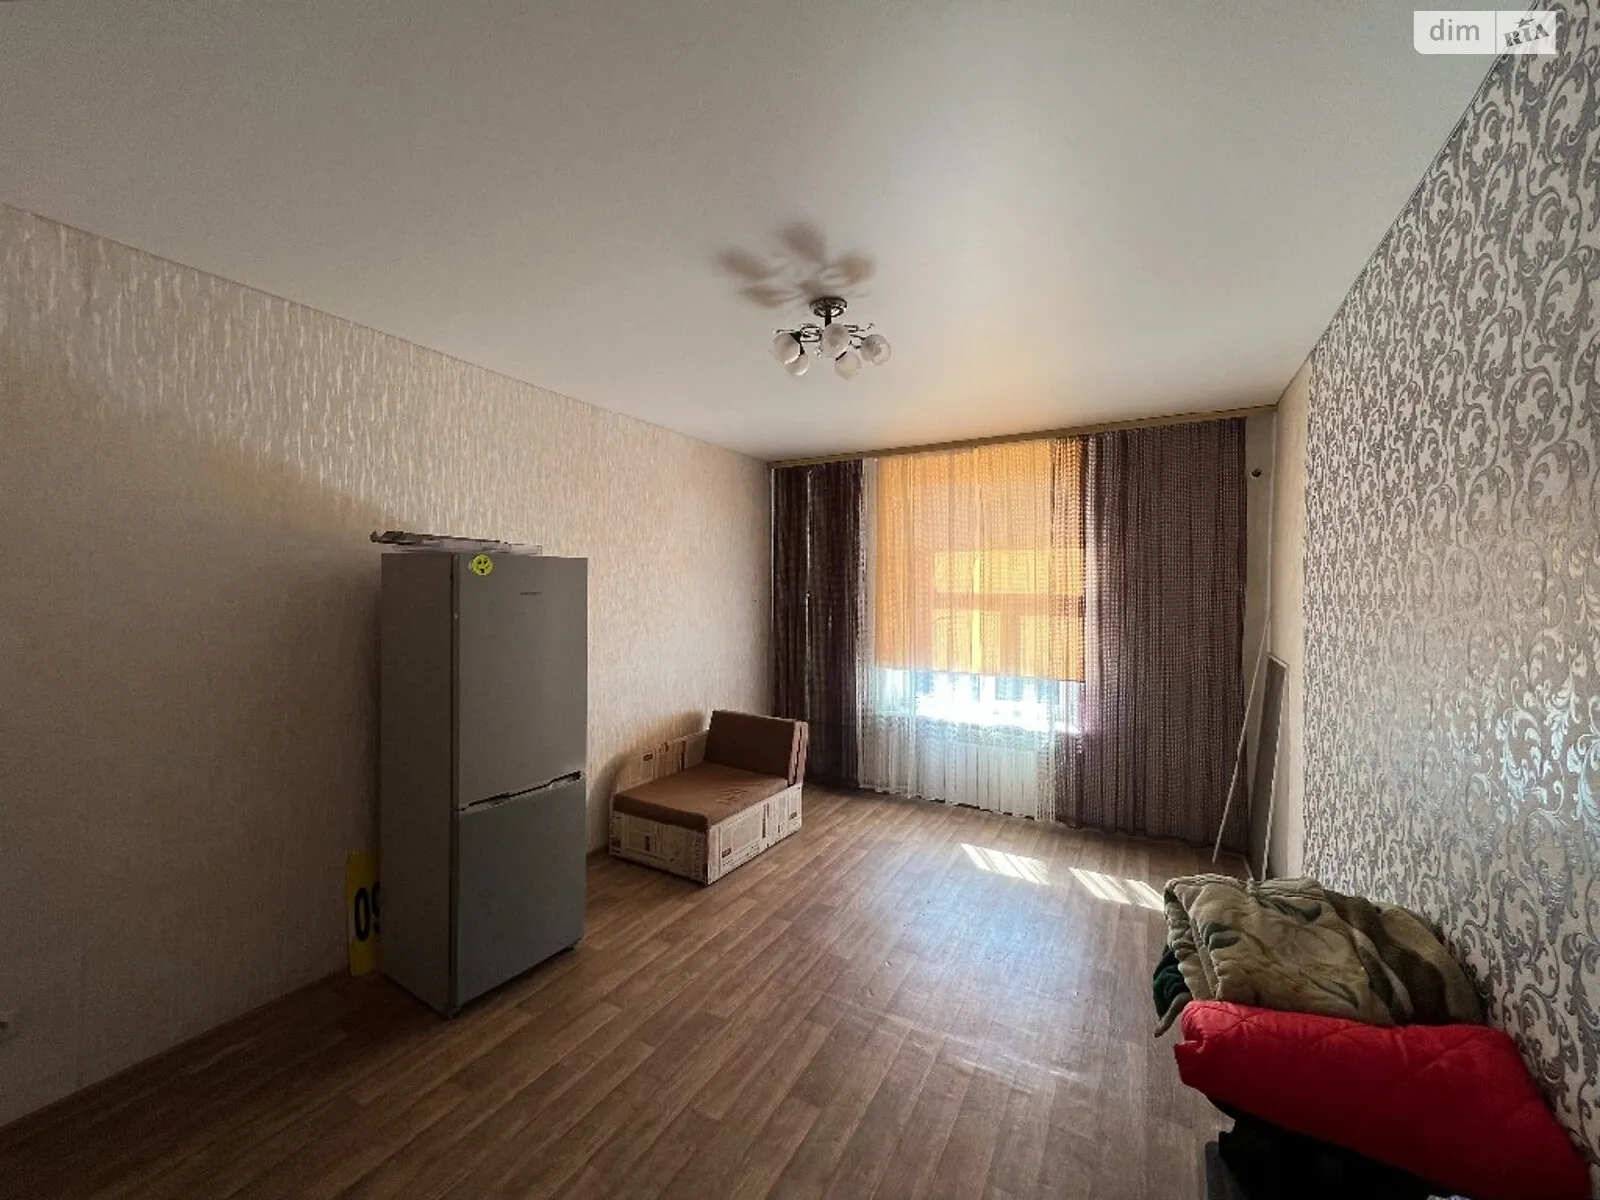 Продается комната 17 кв. м в Одессе, цена: 6800 $ - фото 1